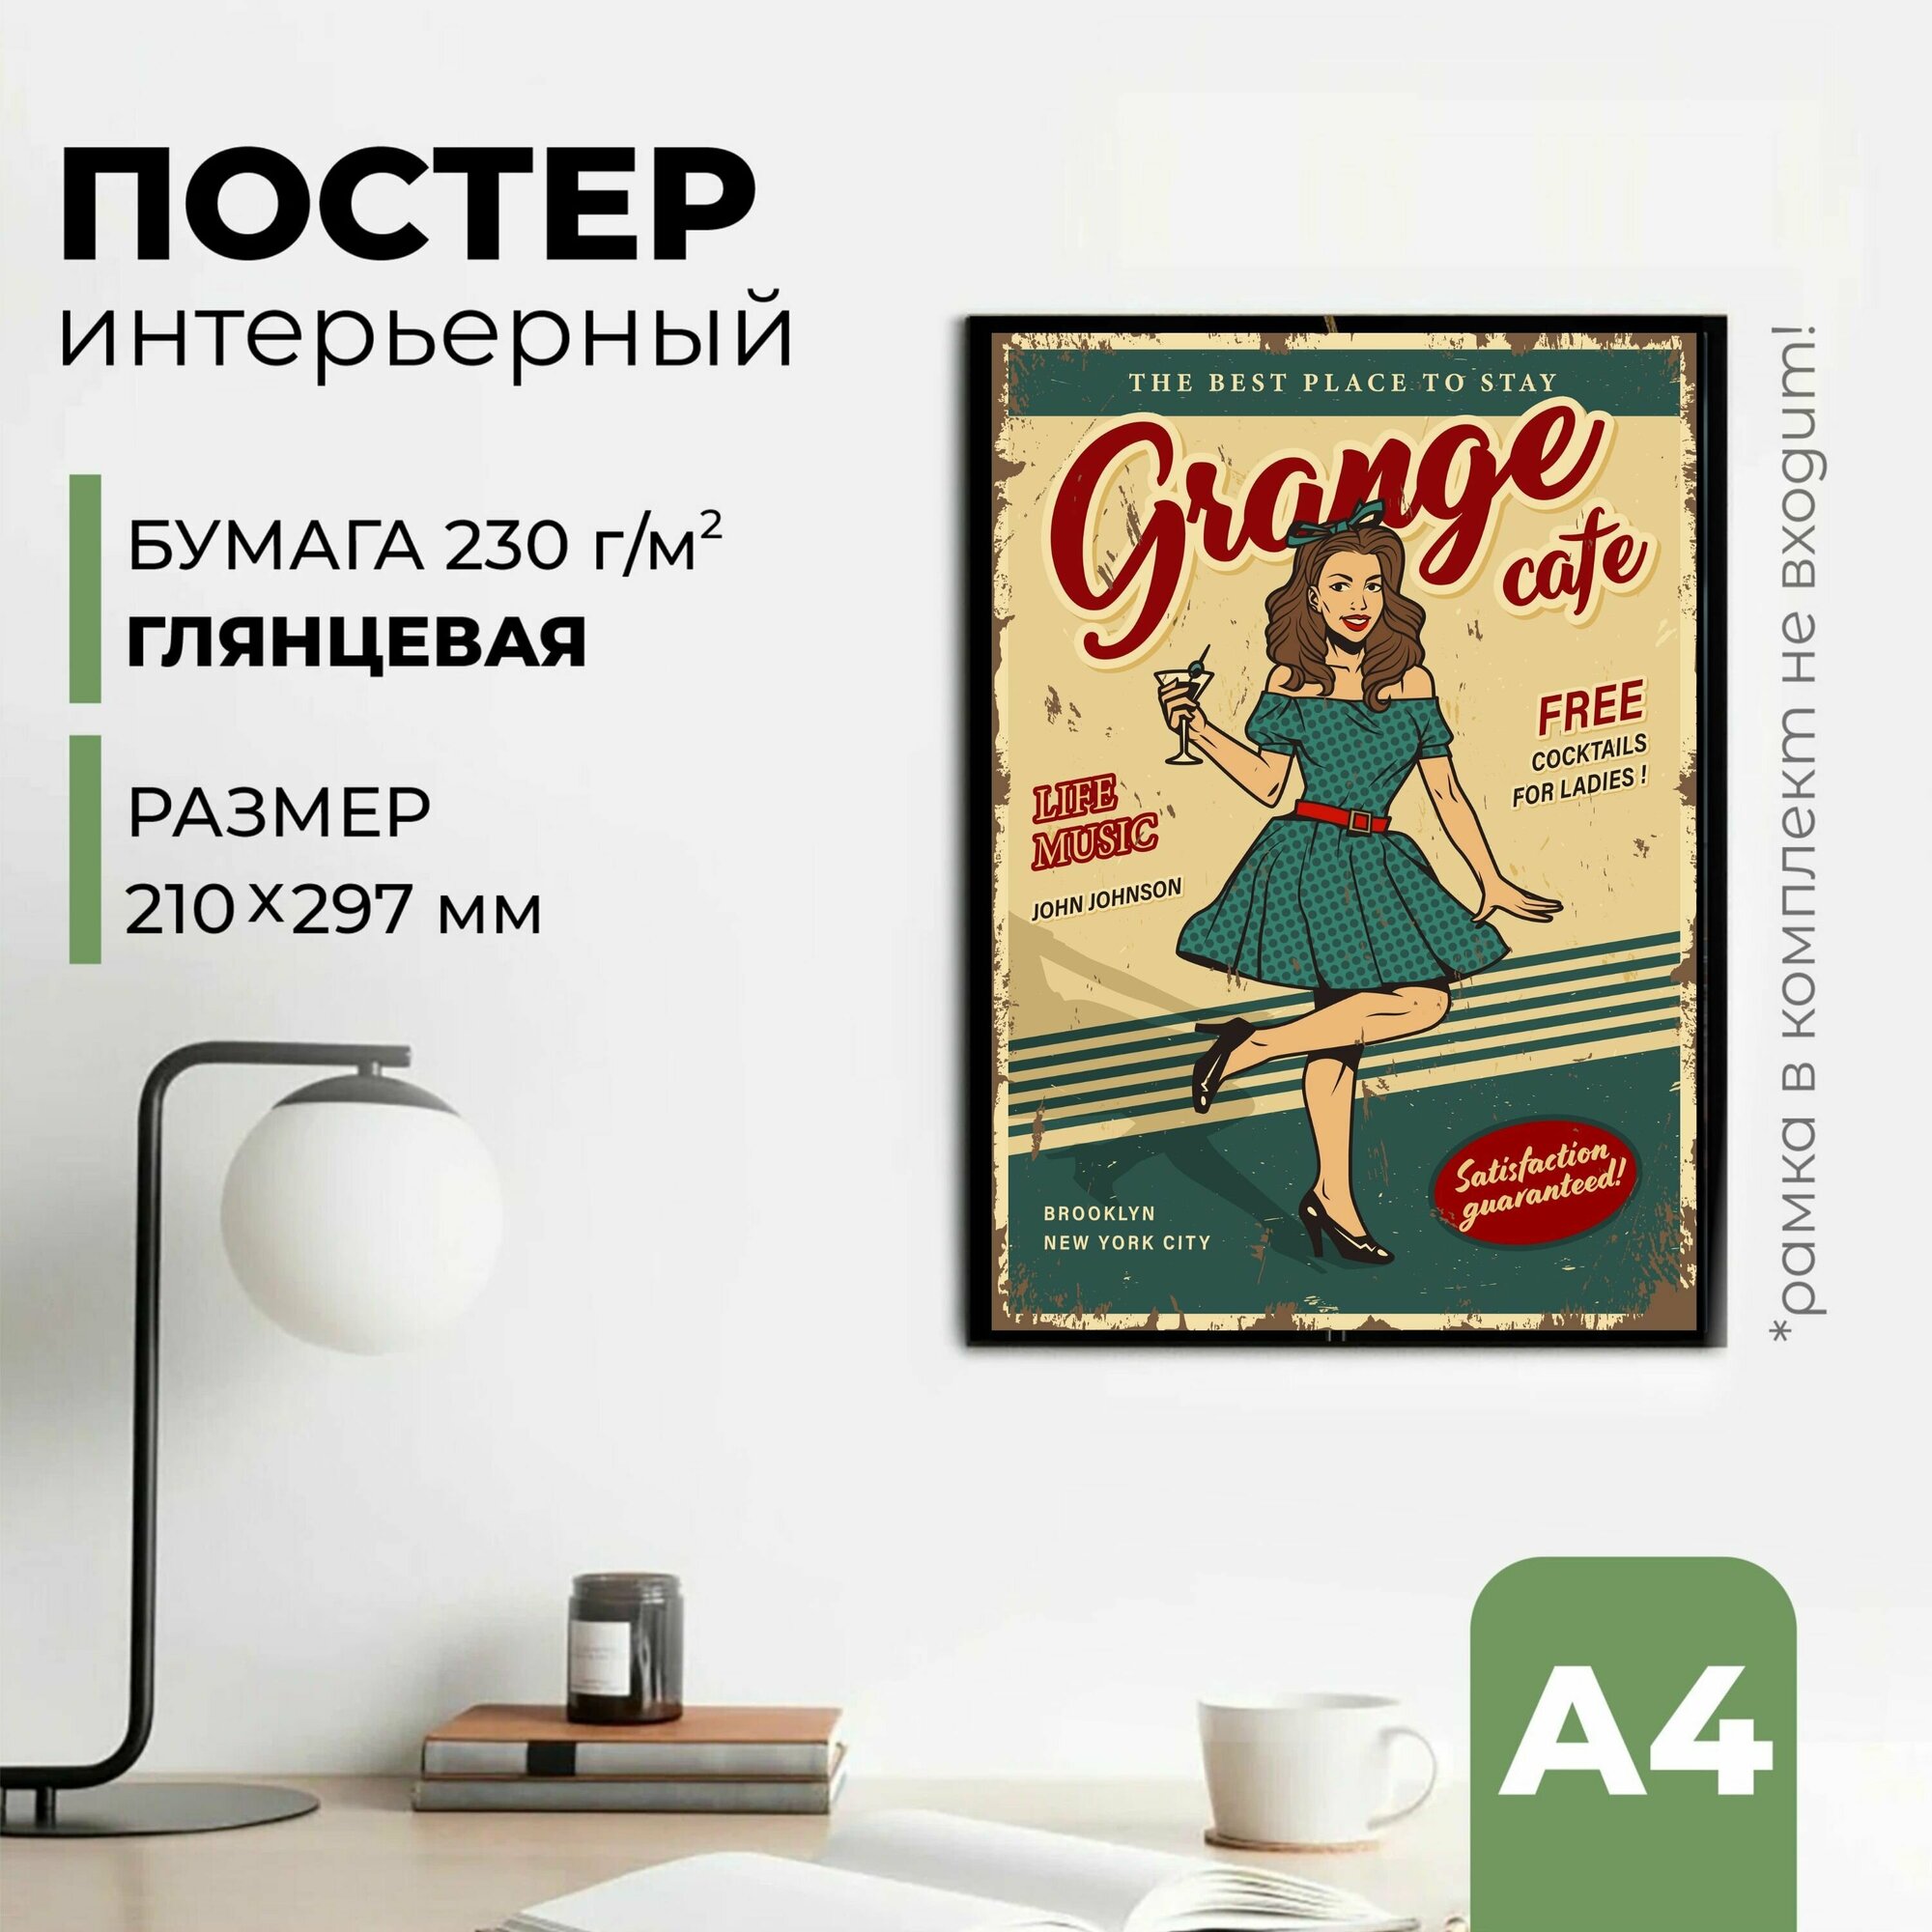 Постер/Постеры для интерьера "Плакат винтажный" бумага глянцевая, размер 20 см х 30 см.